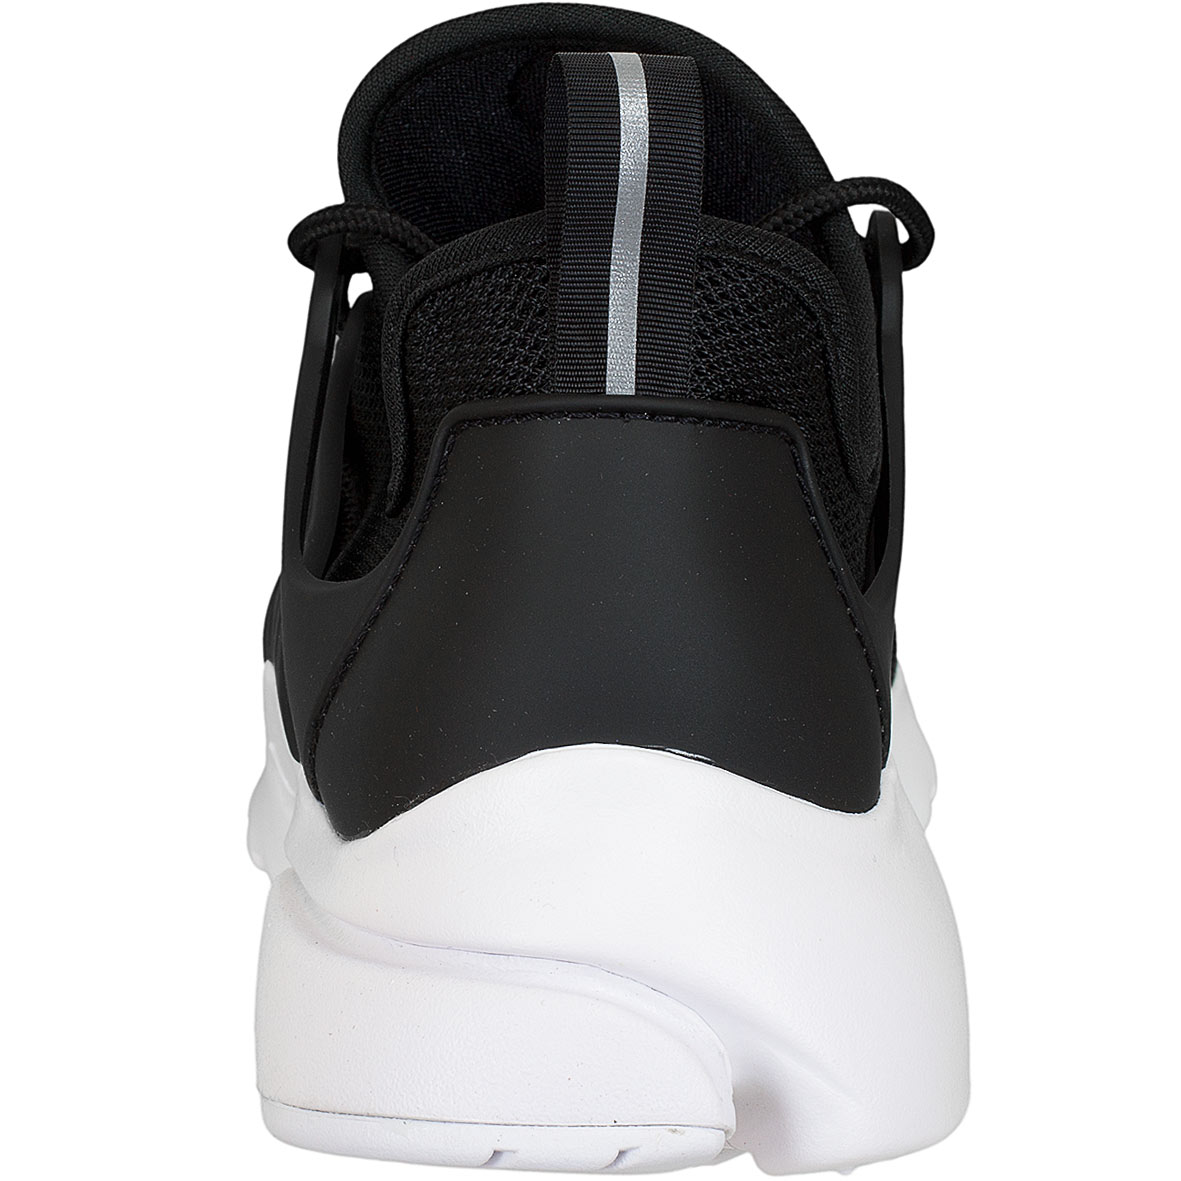 ☆ Nike Damen Sneaker Air Presto Ultra BR schwarz/schwarz - hier bestellen!